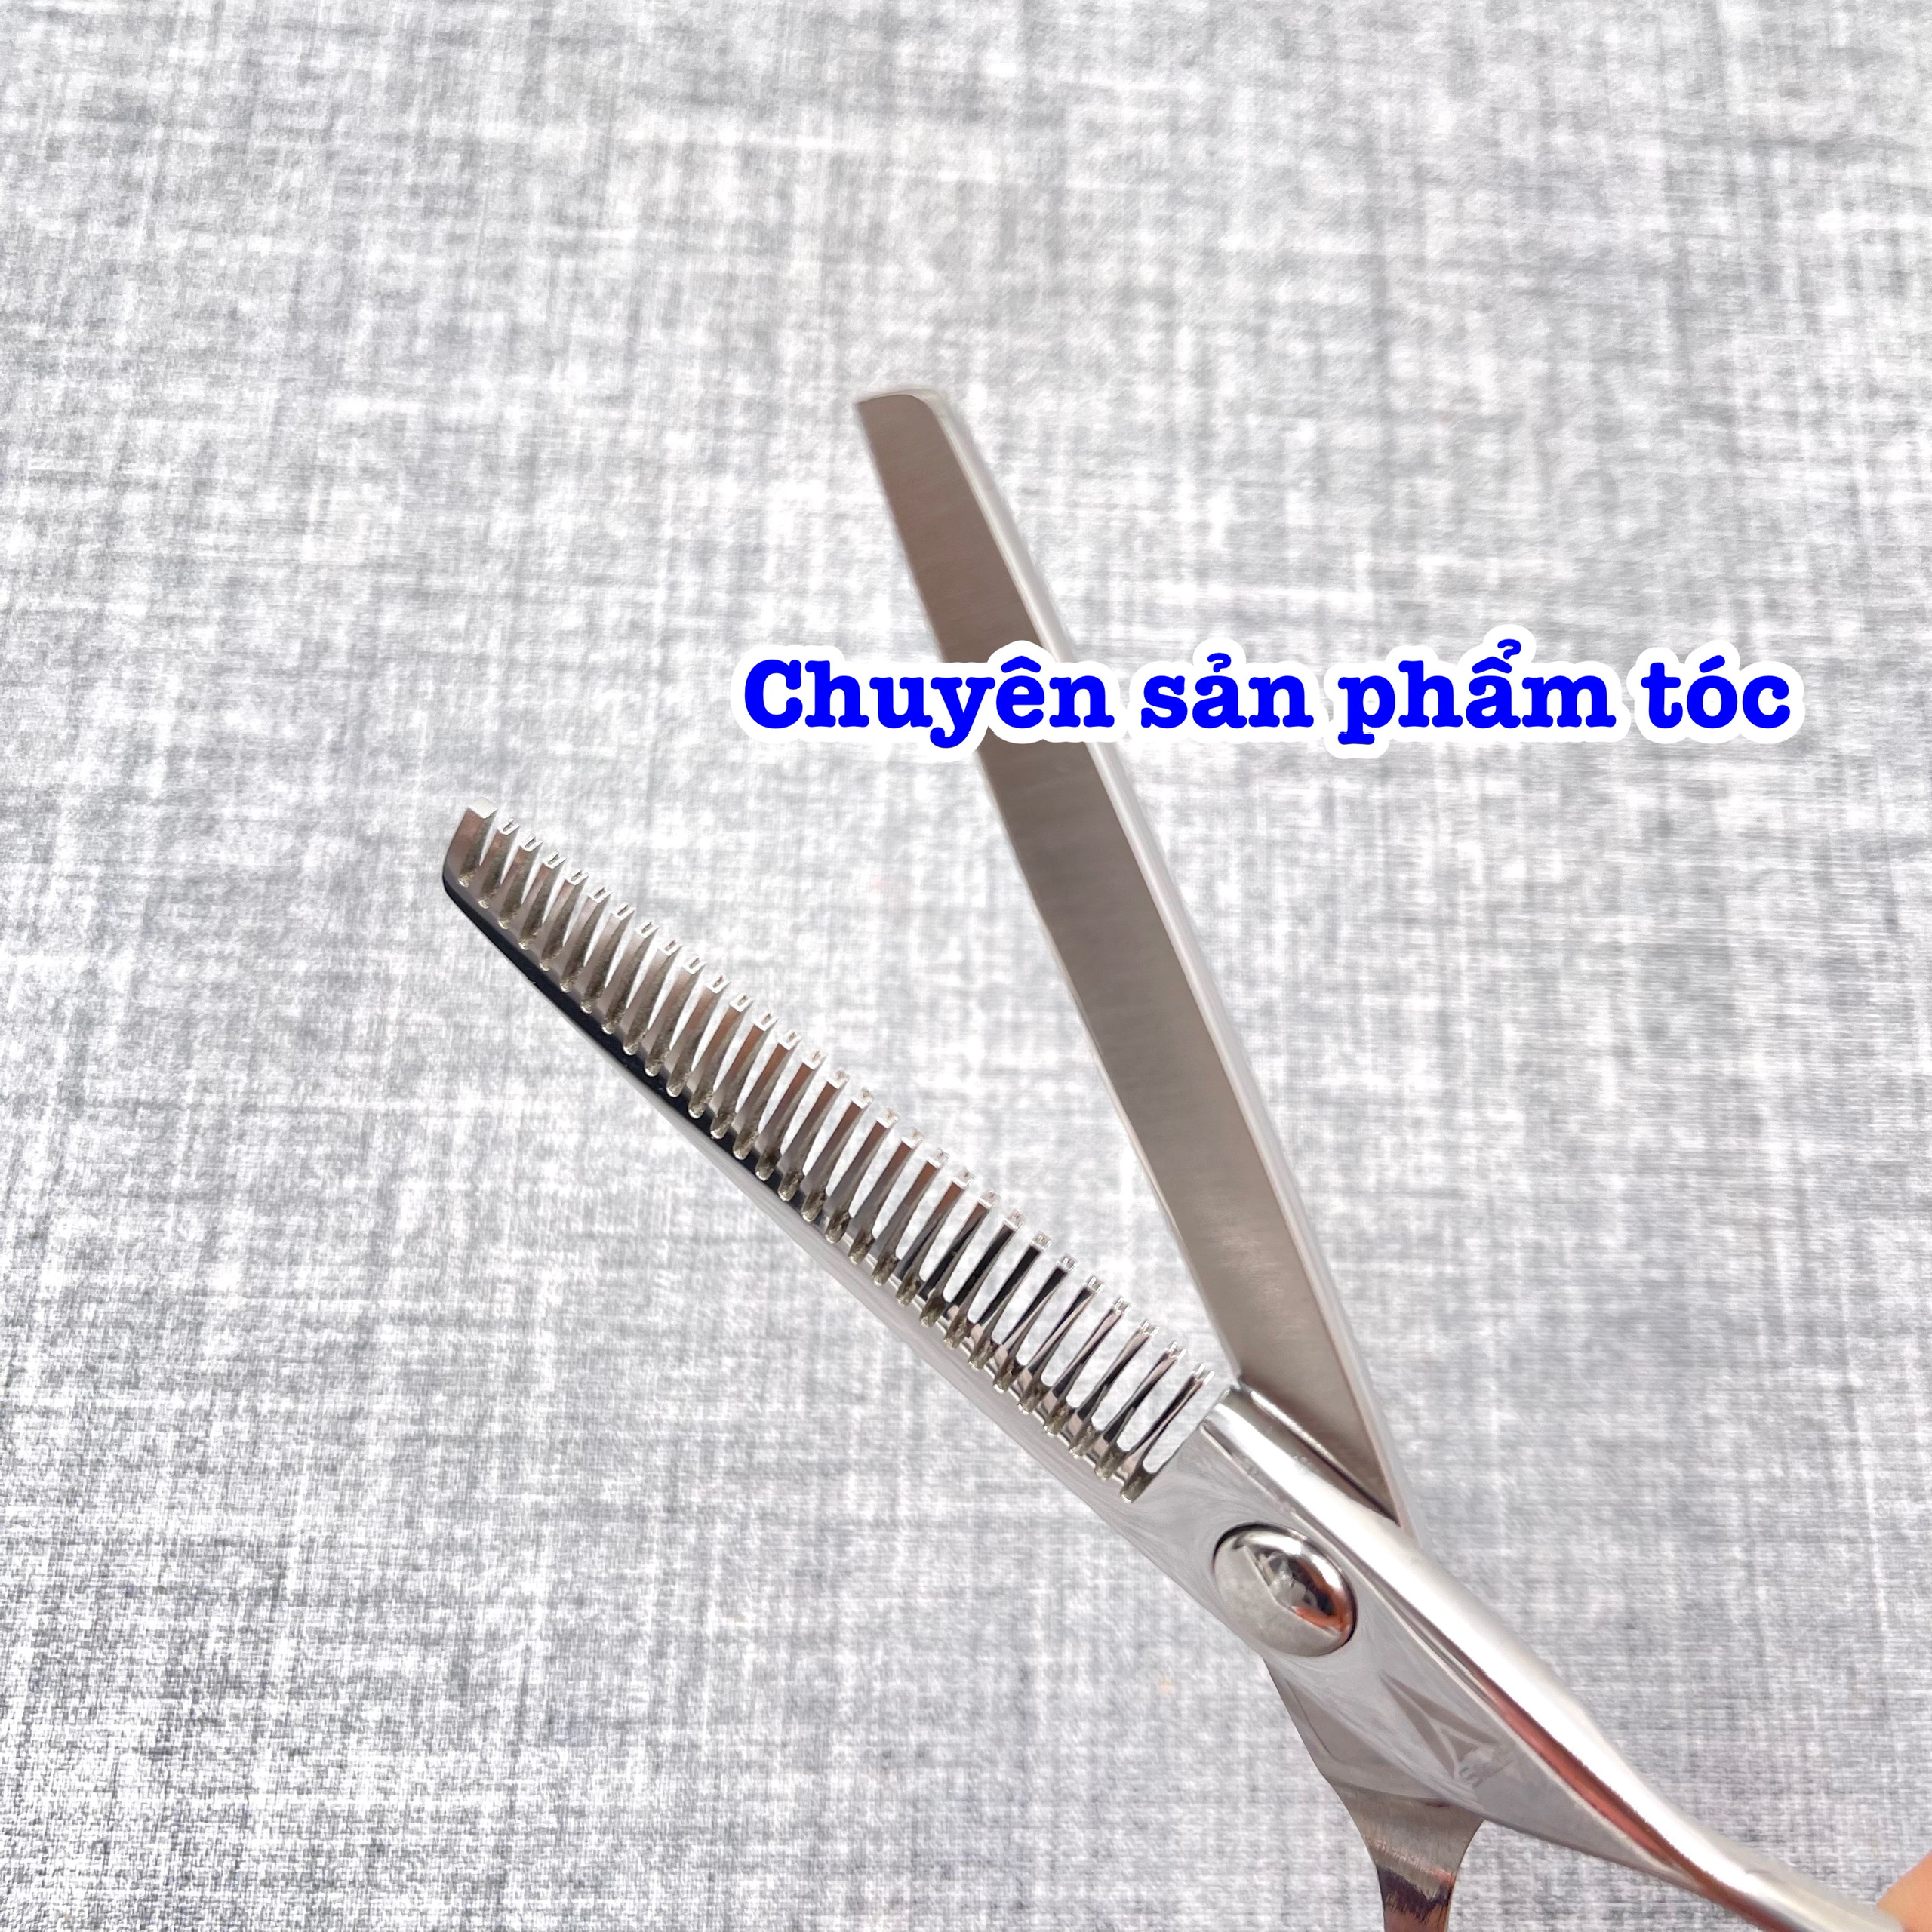 Kéo cắt  tỉa tóc Nhật cao cấp A stark 6.0in